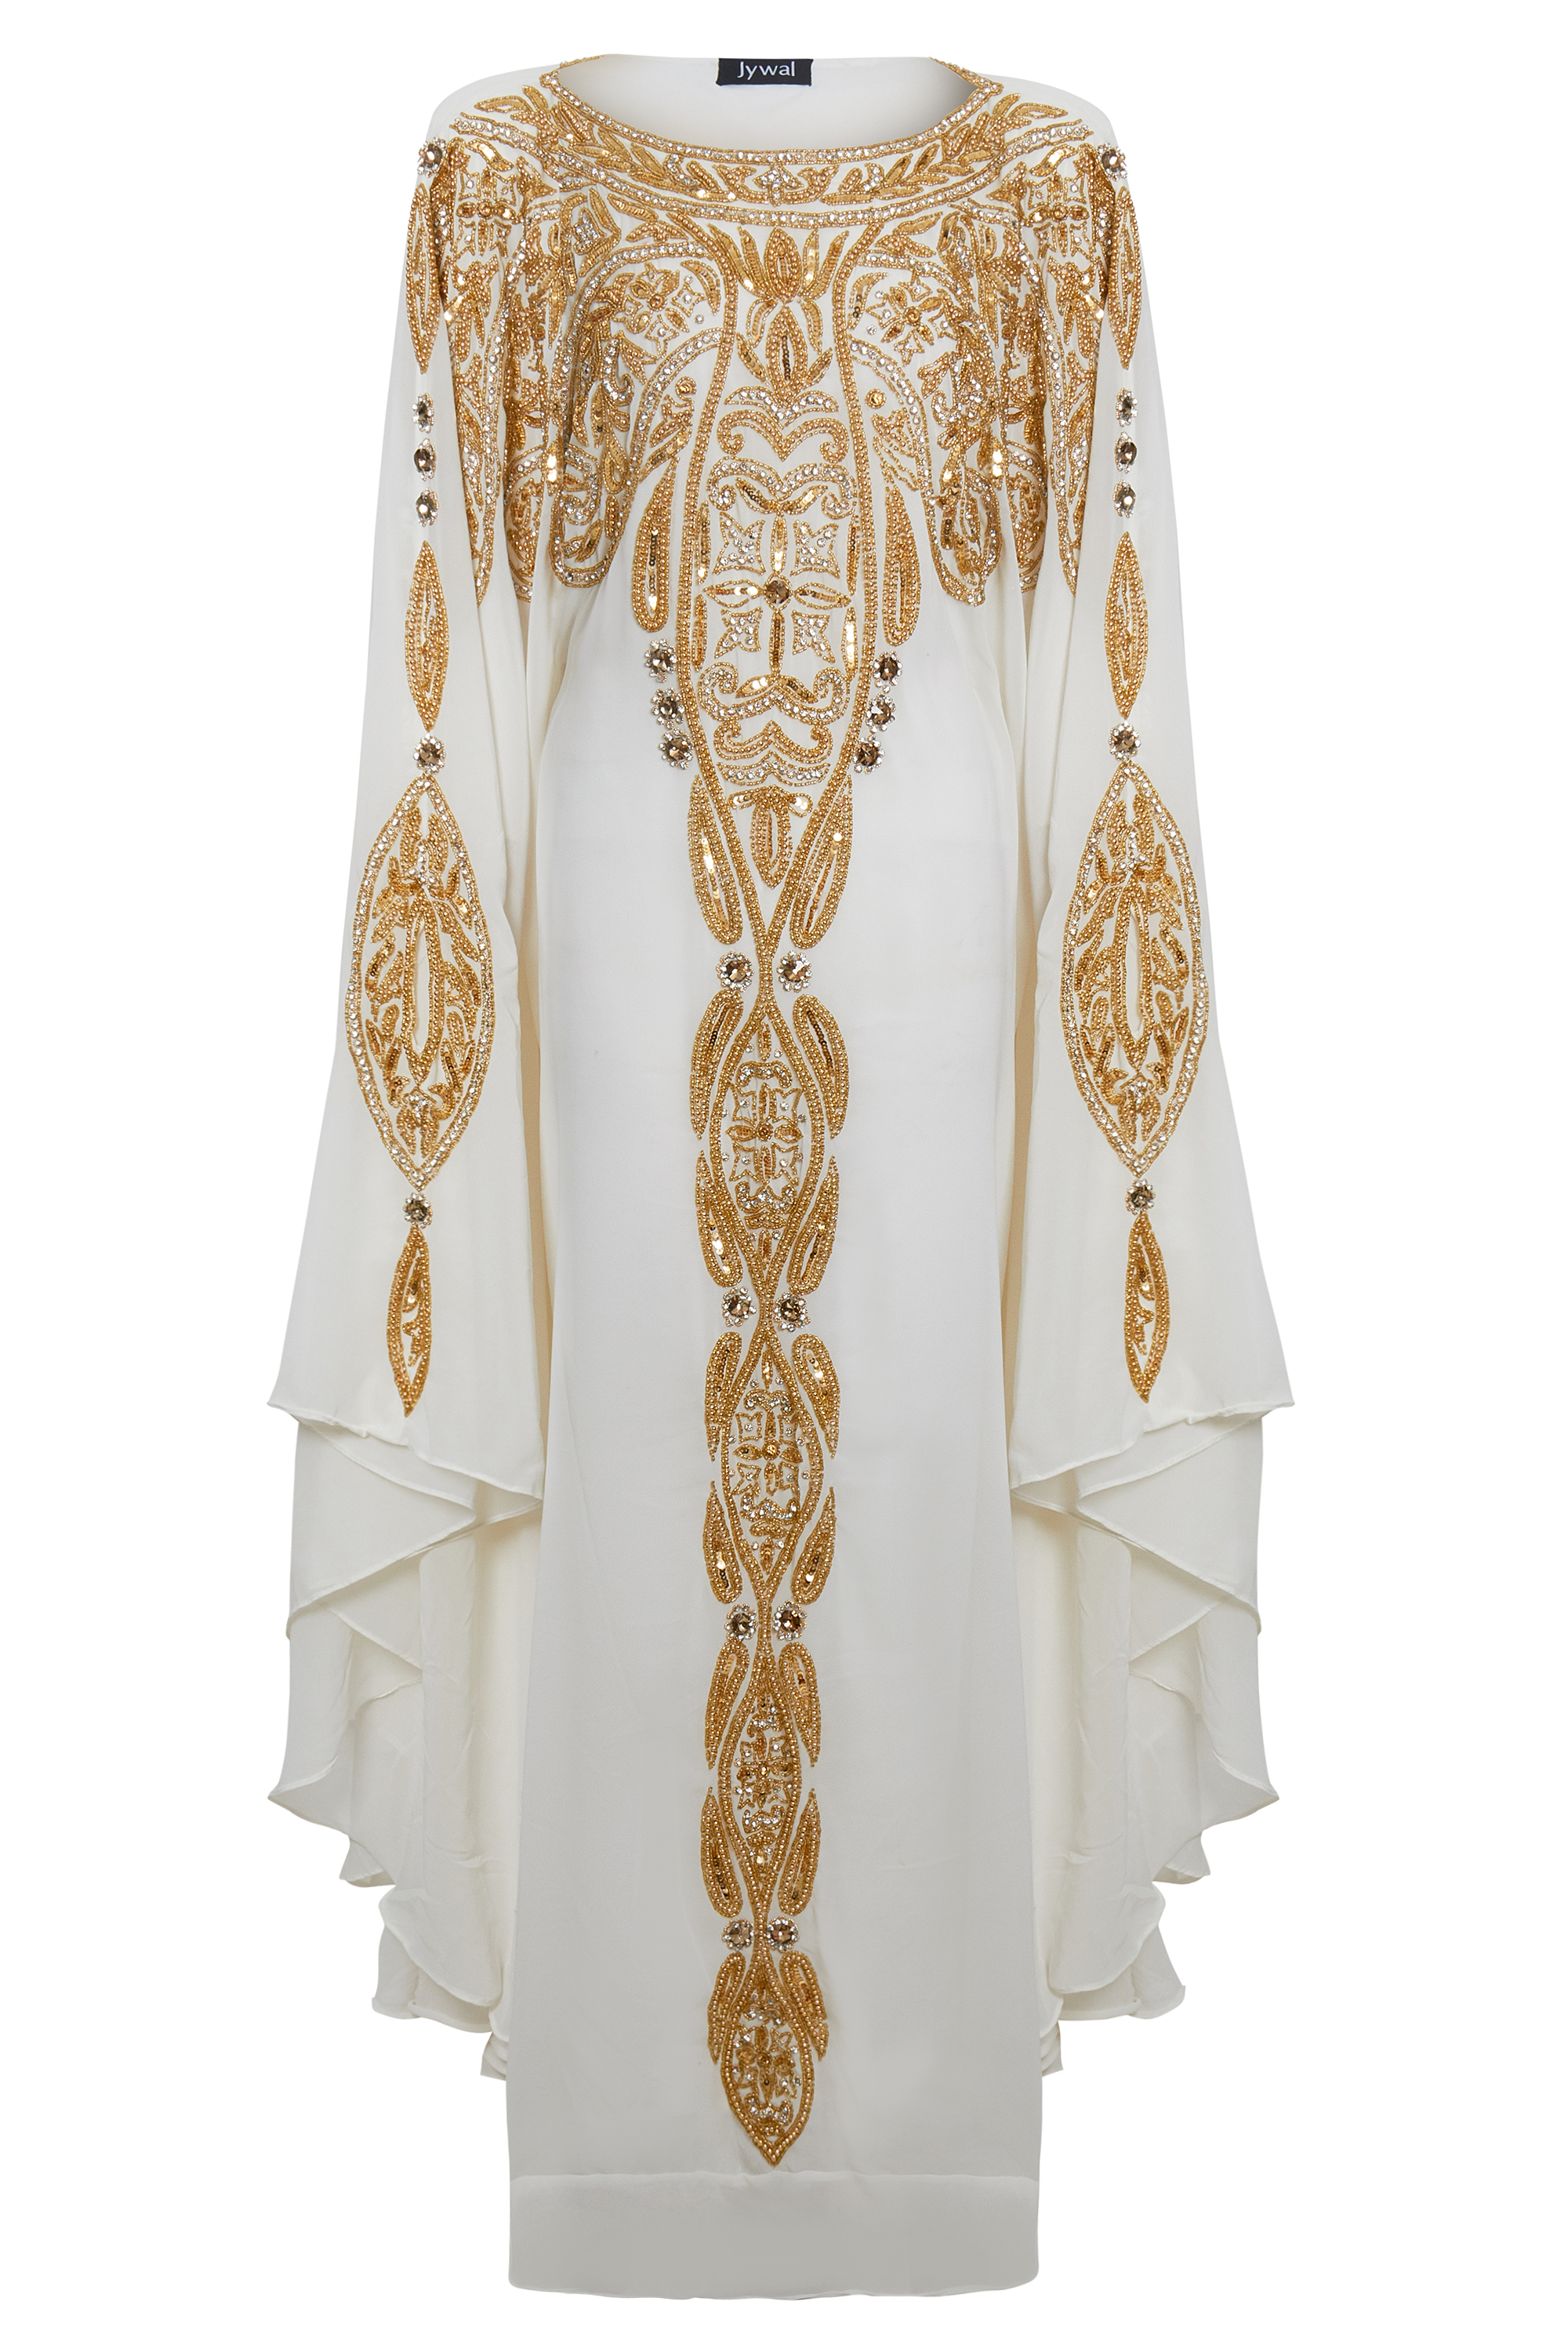 Alya Gold Embellished Off White Wedding Kaftan Maxi Gown | Jywal London